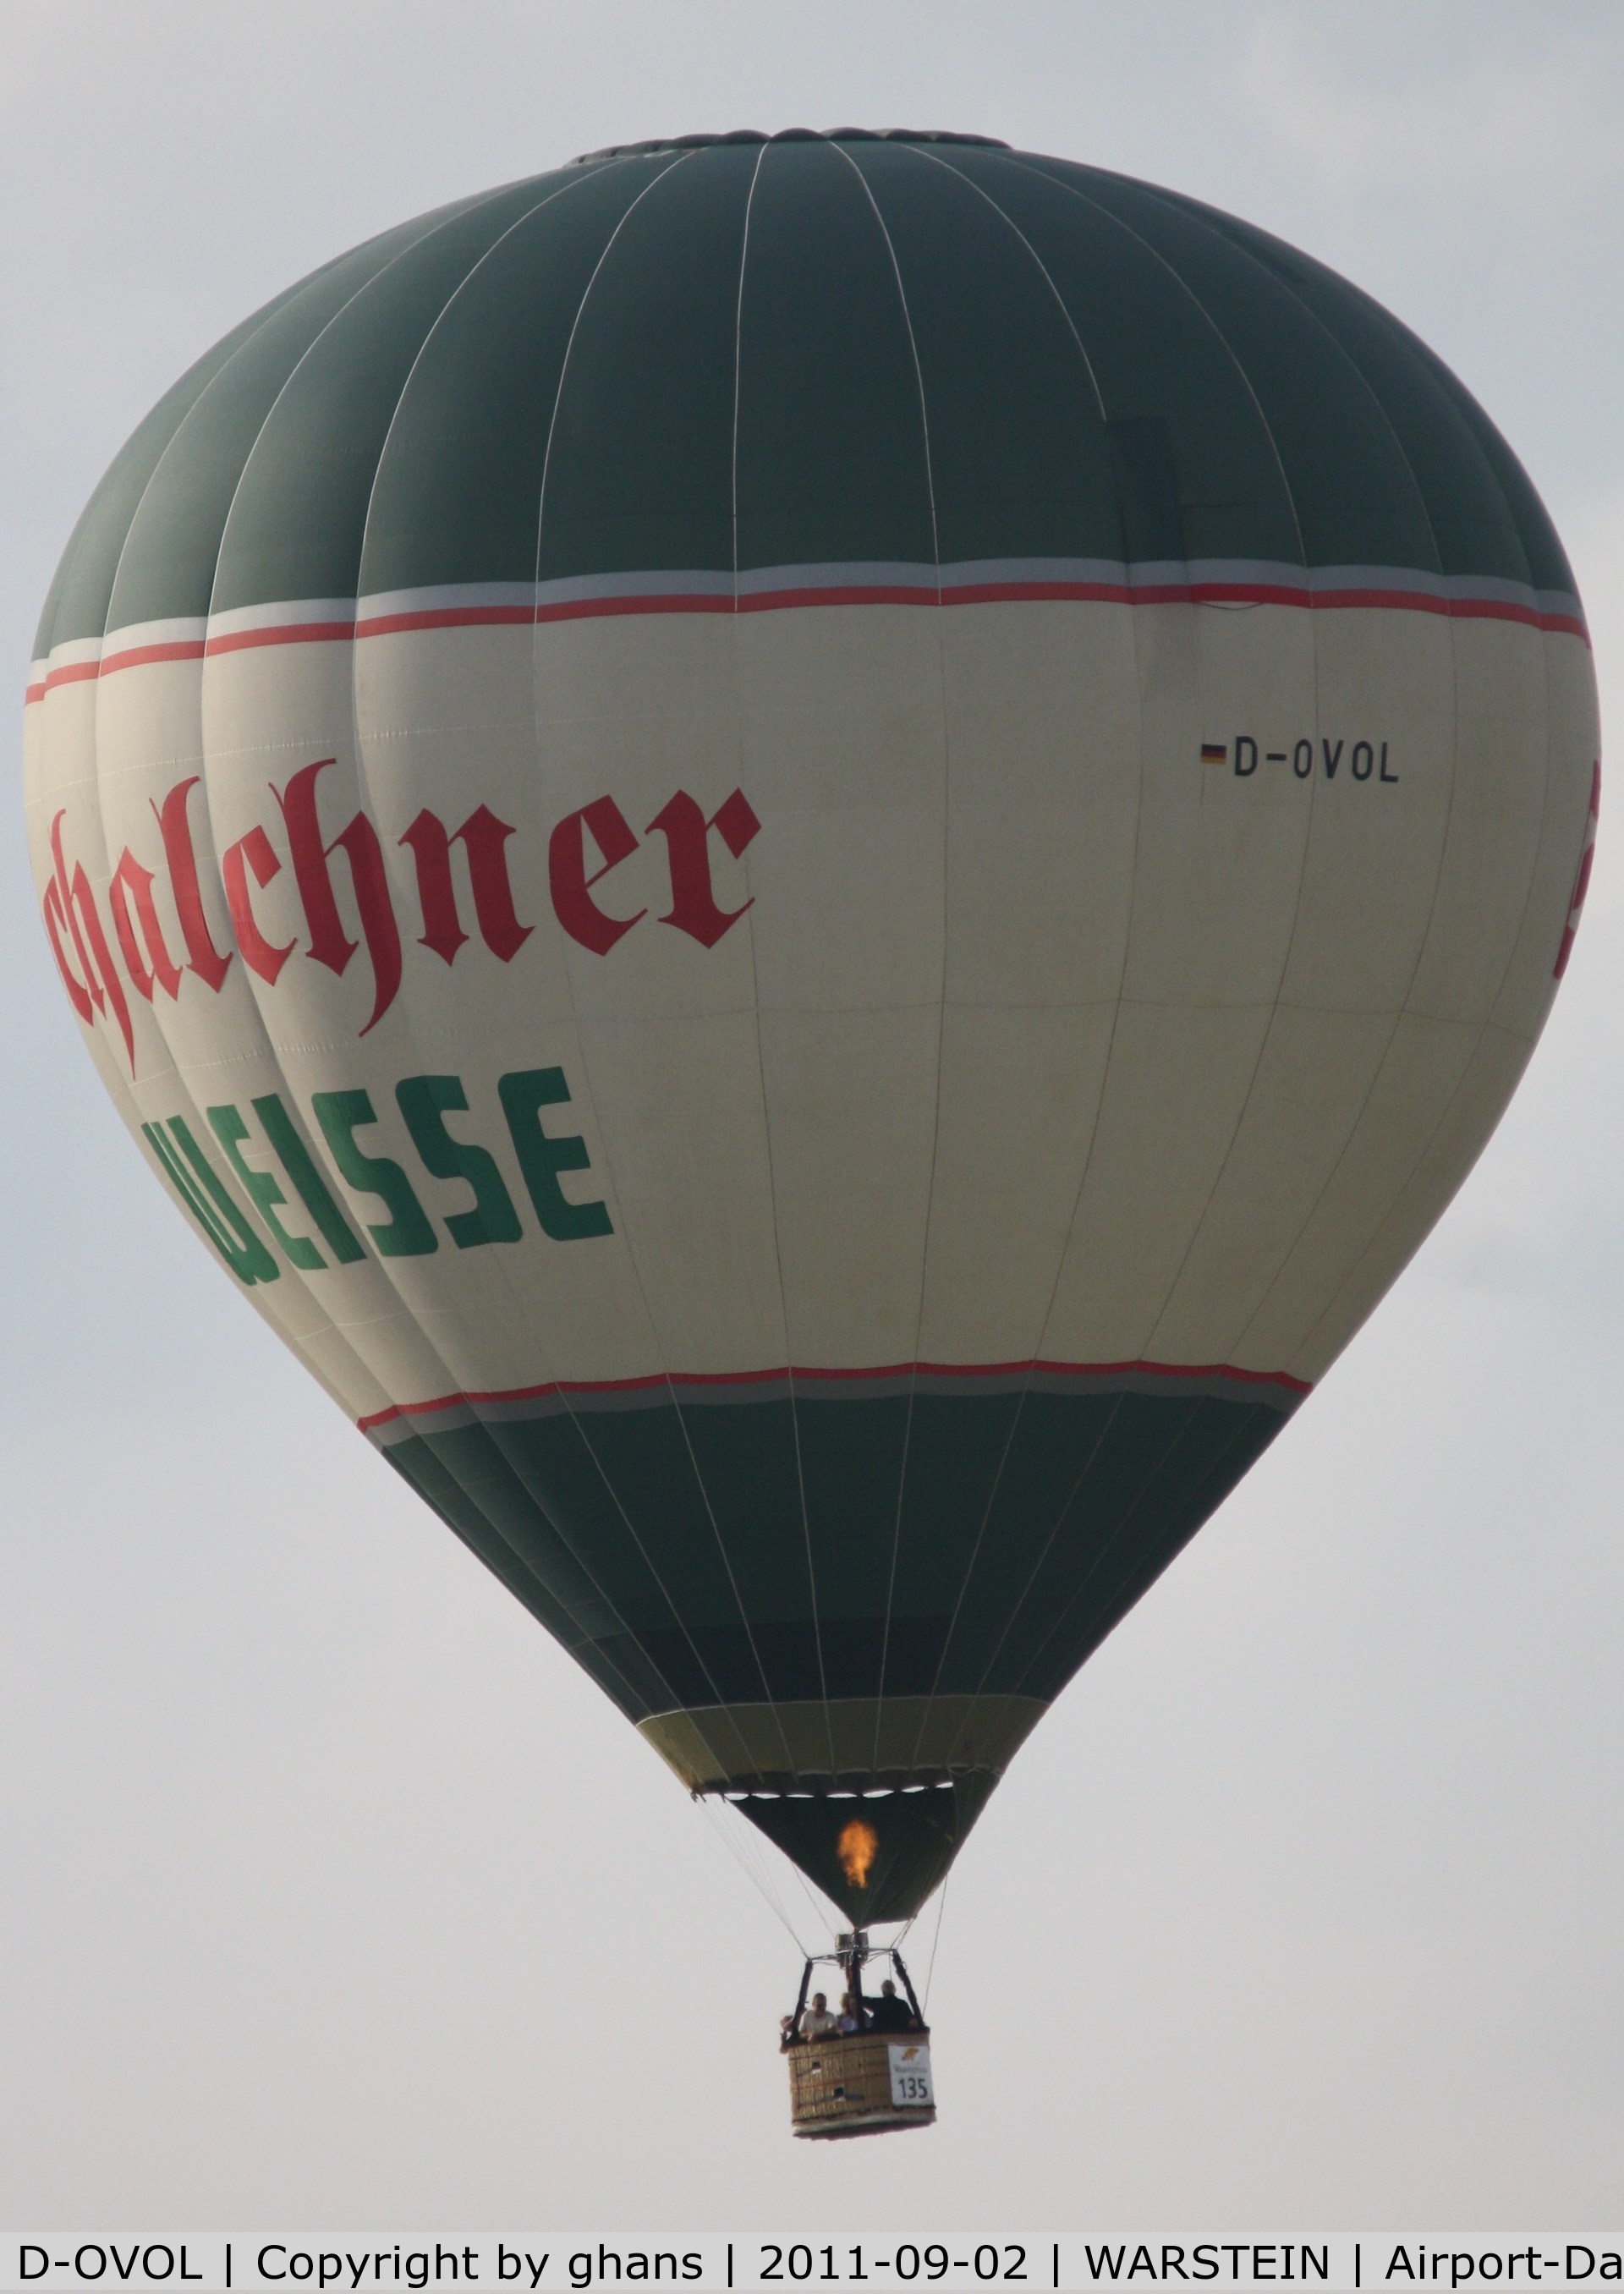 D-OVOL, 2001 Lindstrand Balloons LBL 150A C/N 800, WIM 2011 'Schalchner Weisse'